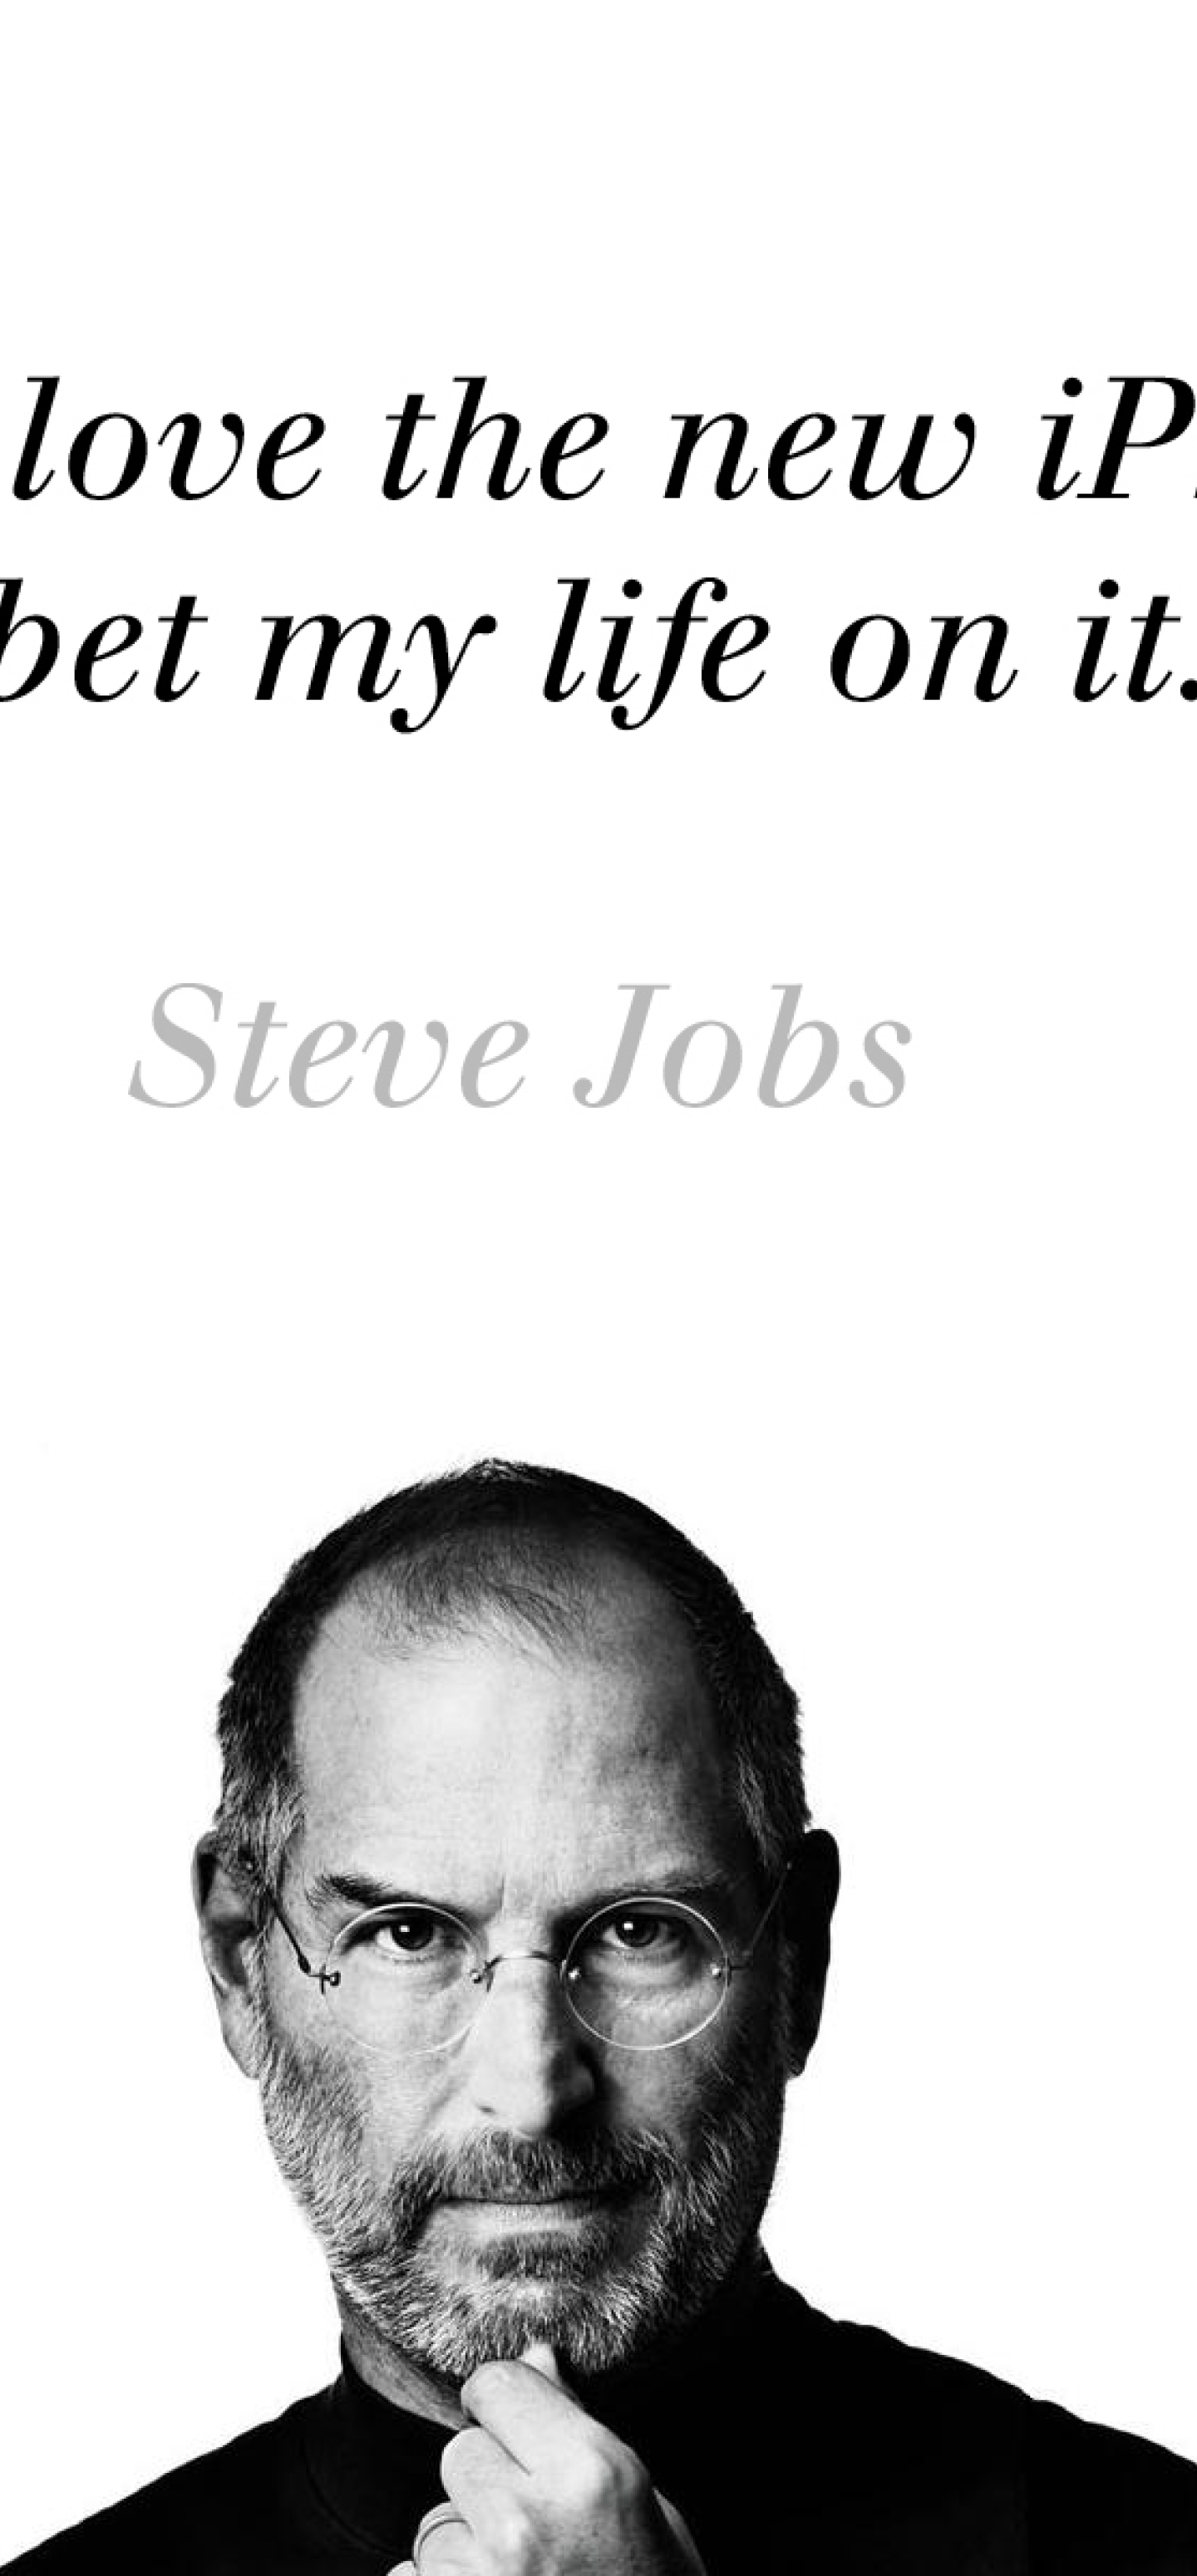 steve jobs wallpaper iphone